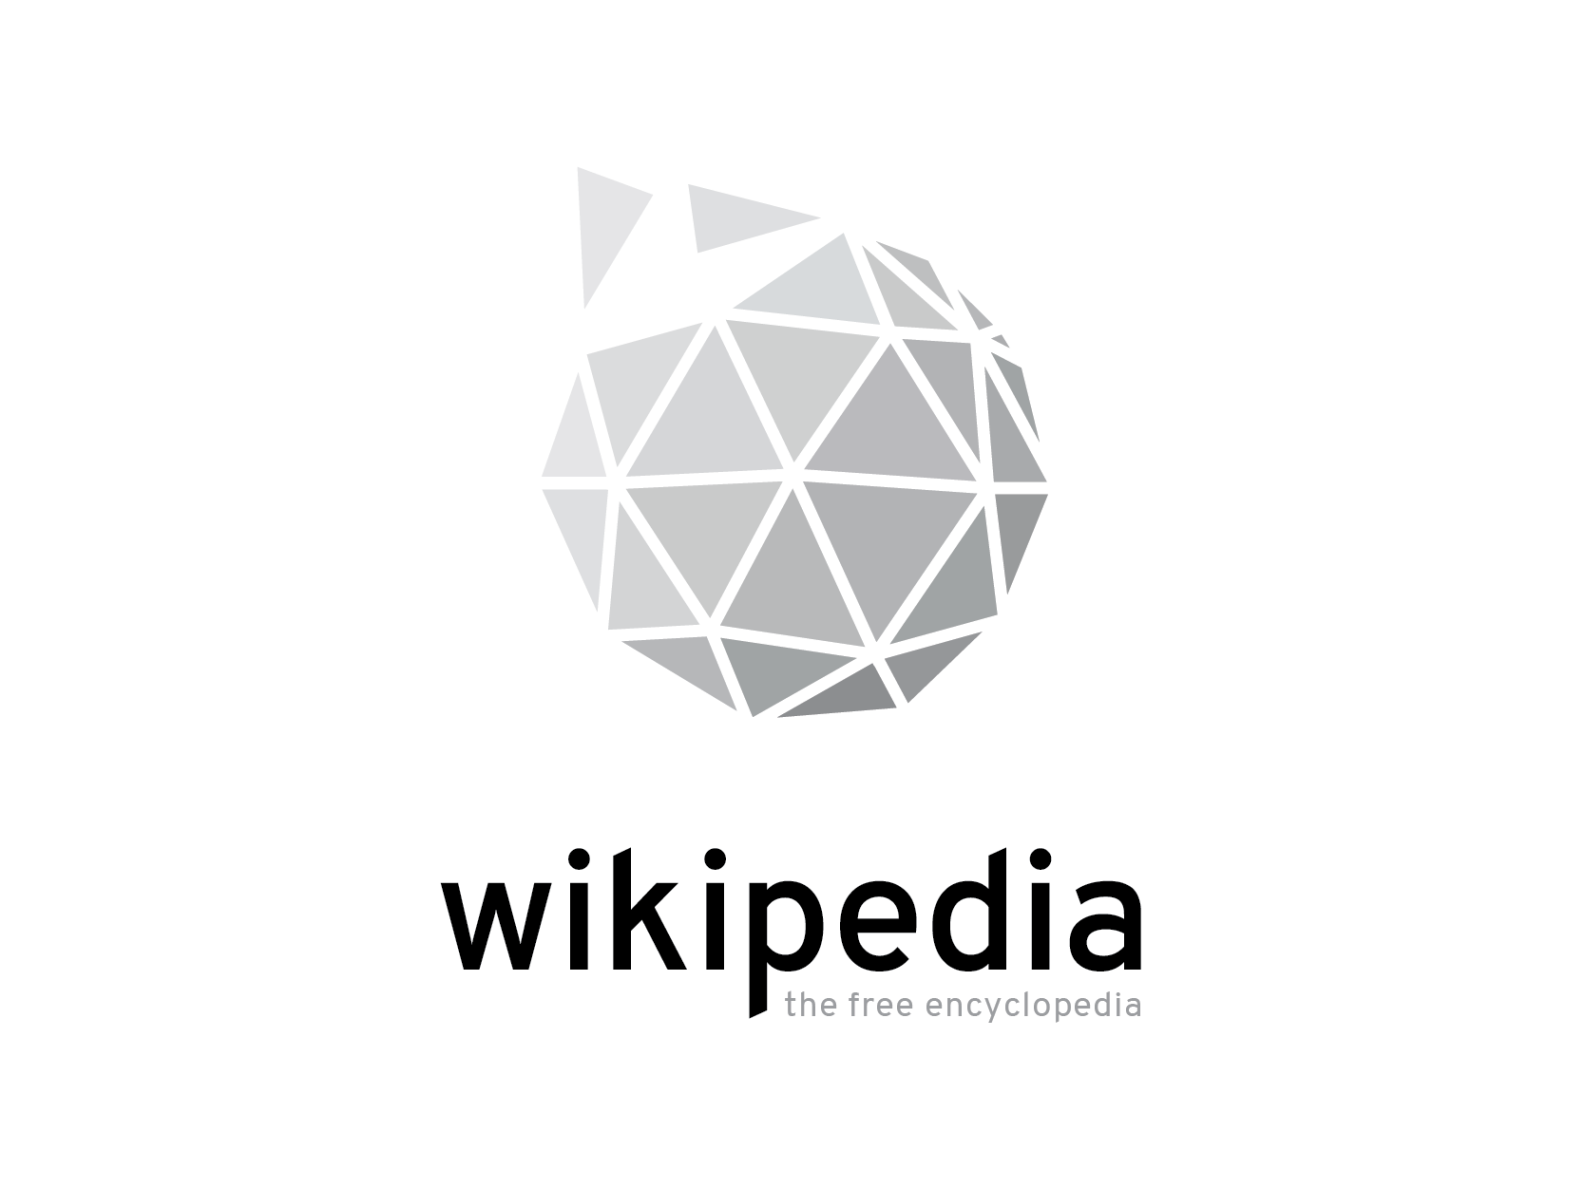 Logos - Wikipedia